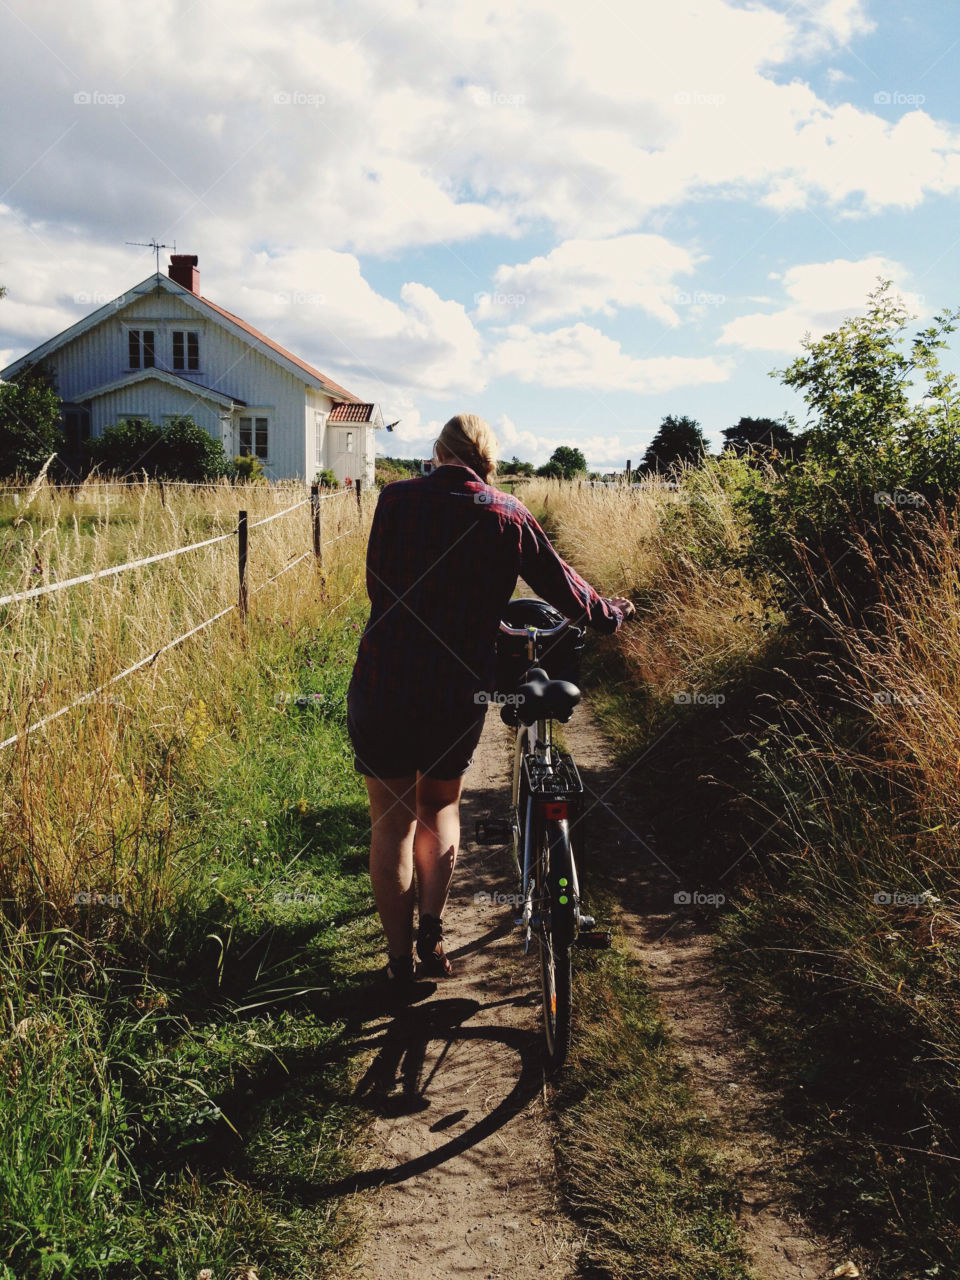 summer sweden girl bike by jogu84